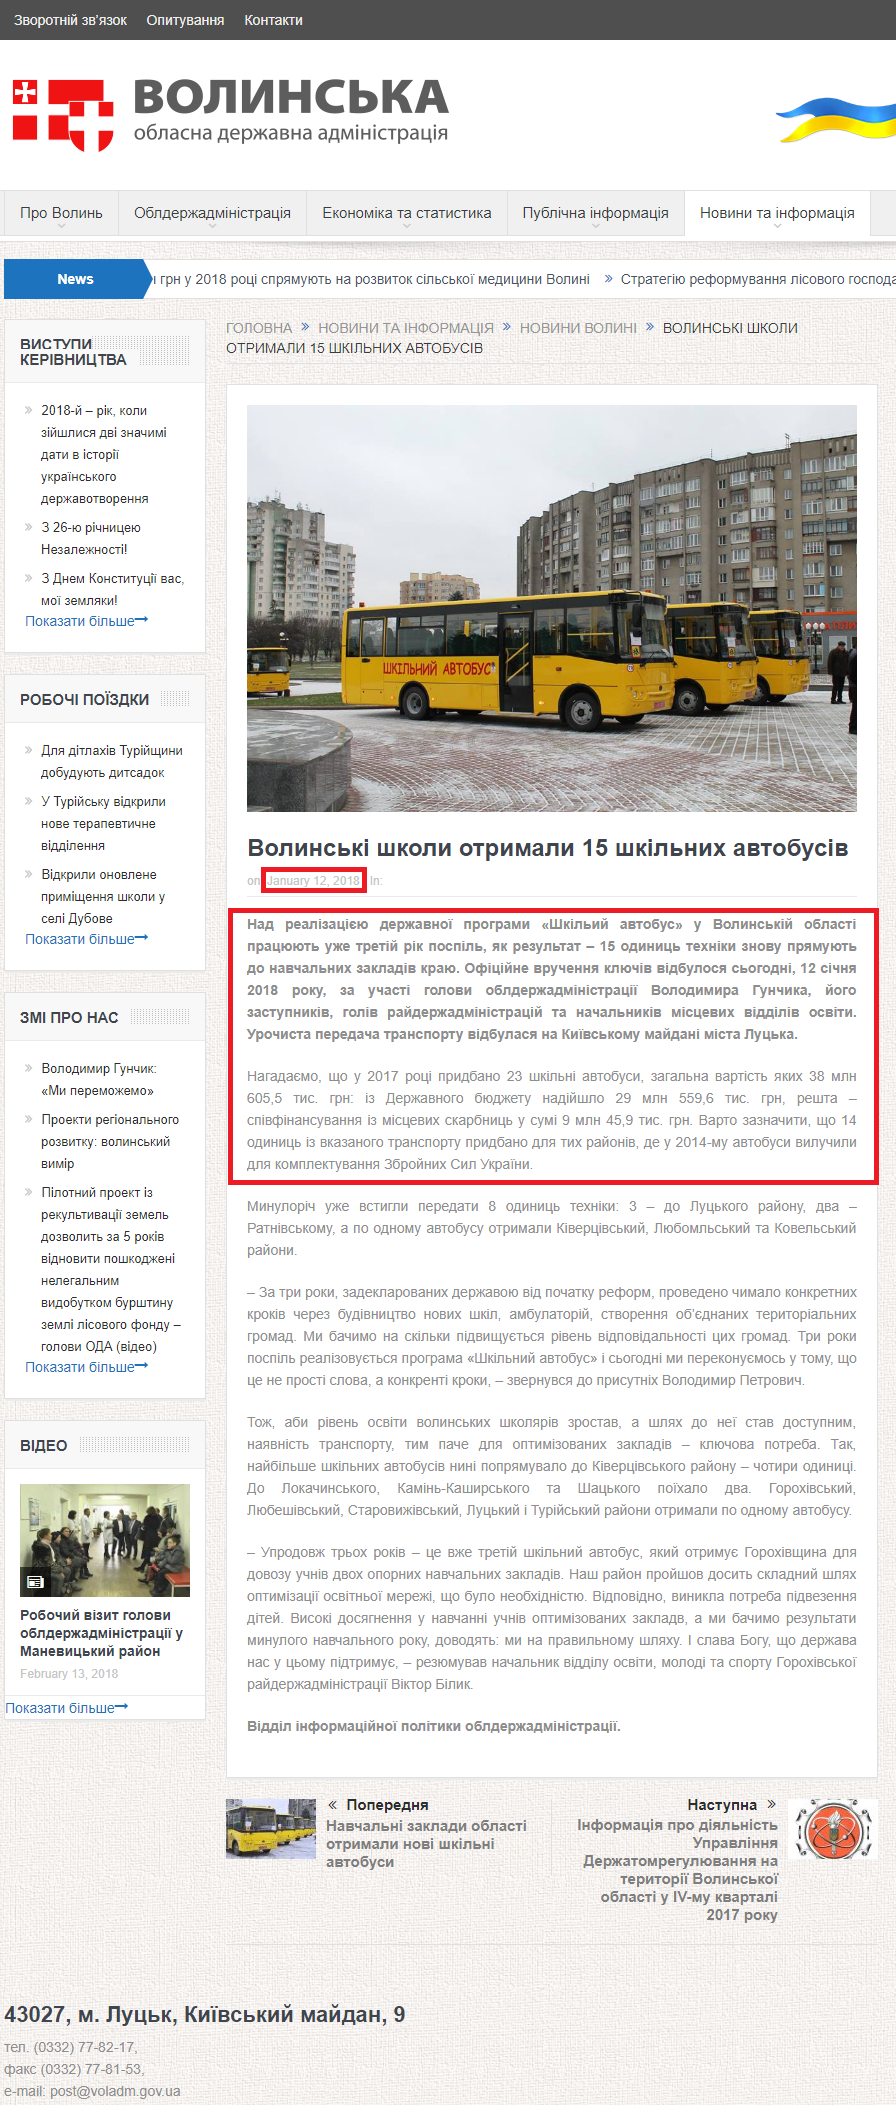 http://voladm.gov.ua/volinski-shkoli-otrimali-15-shkilnix-avtobusiv/